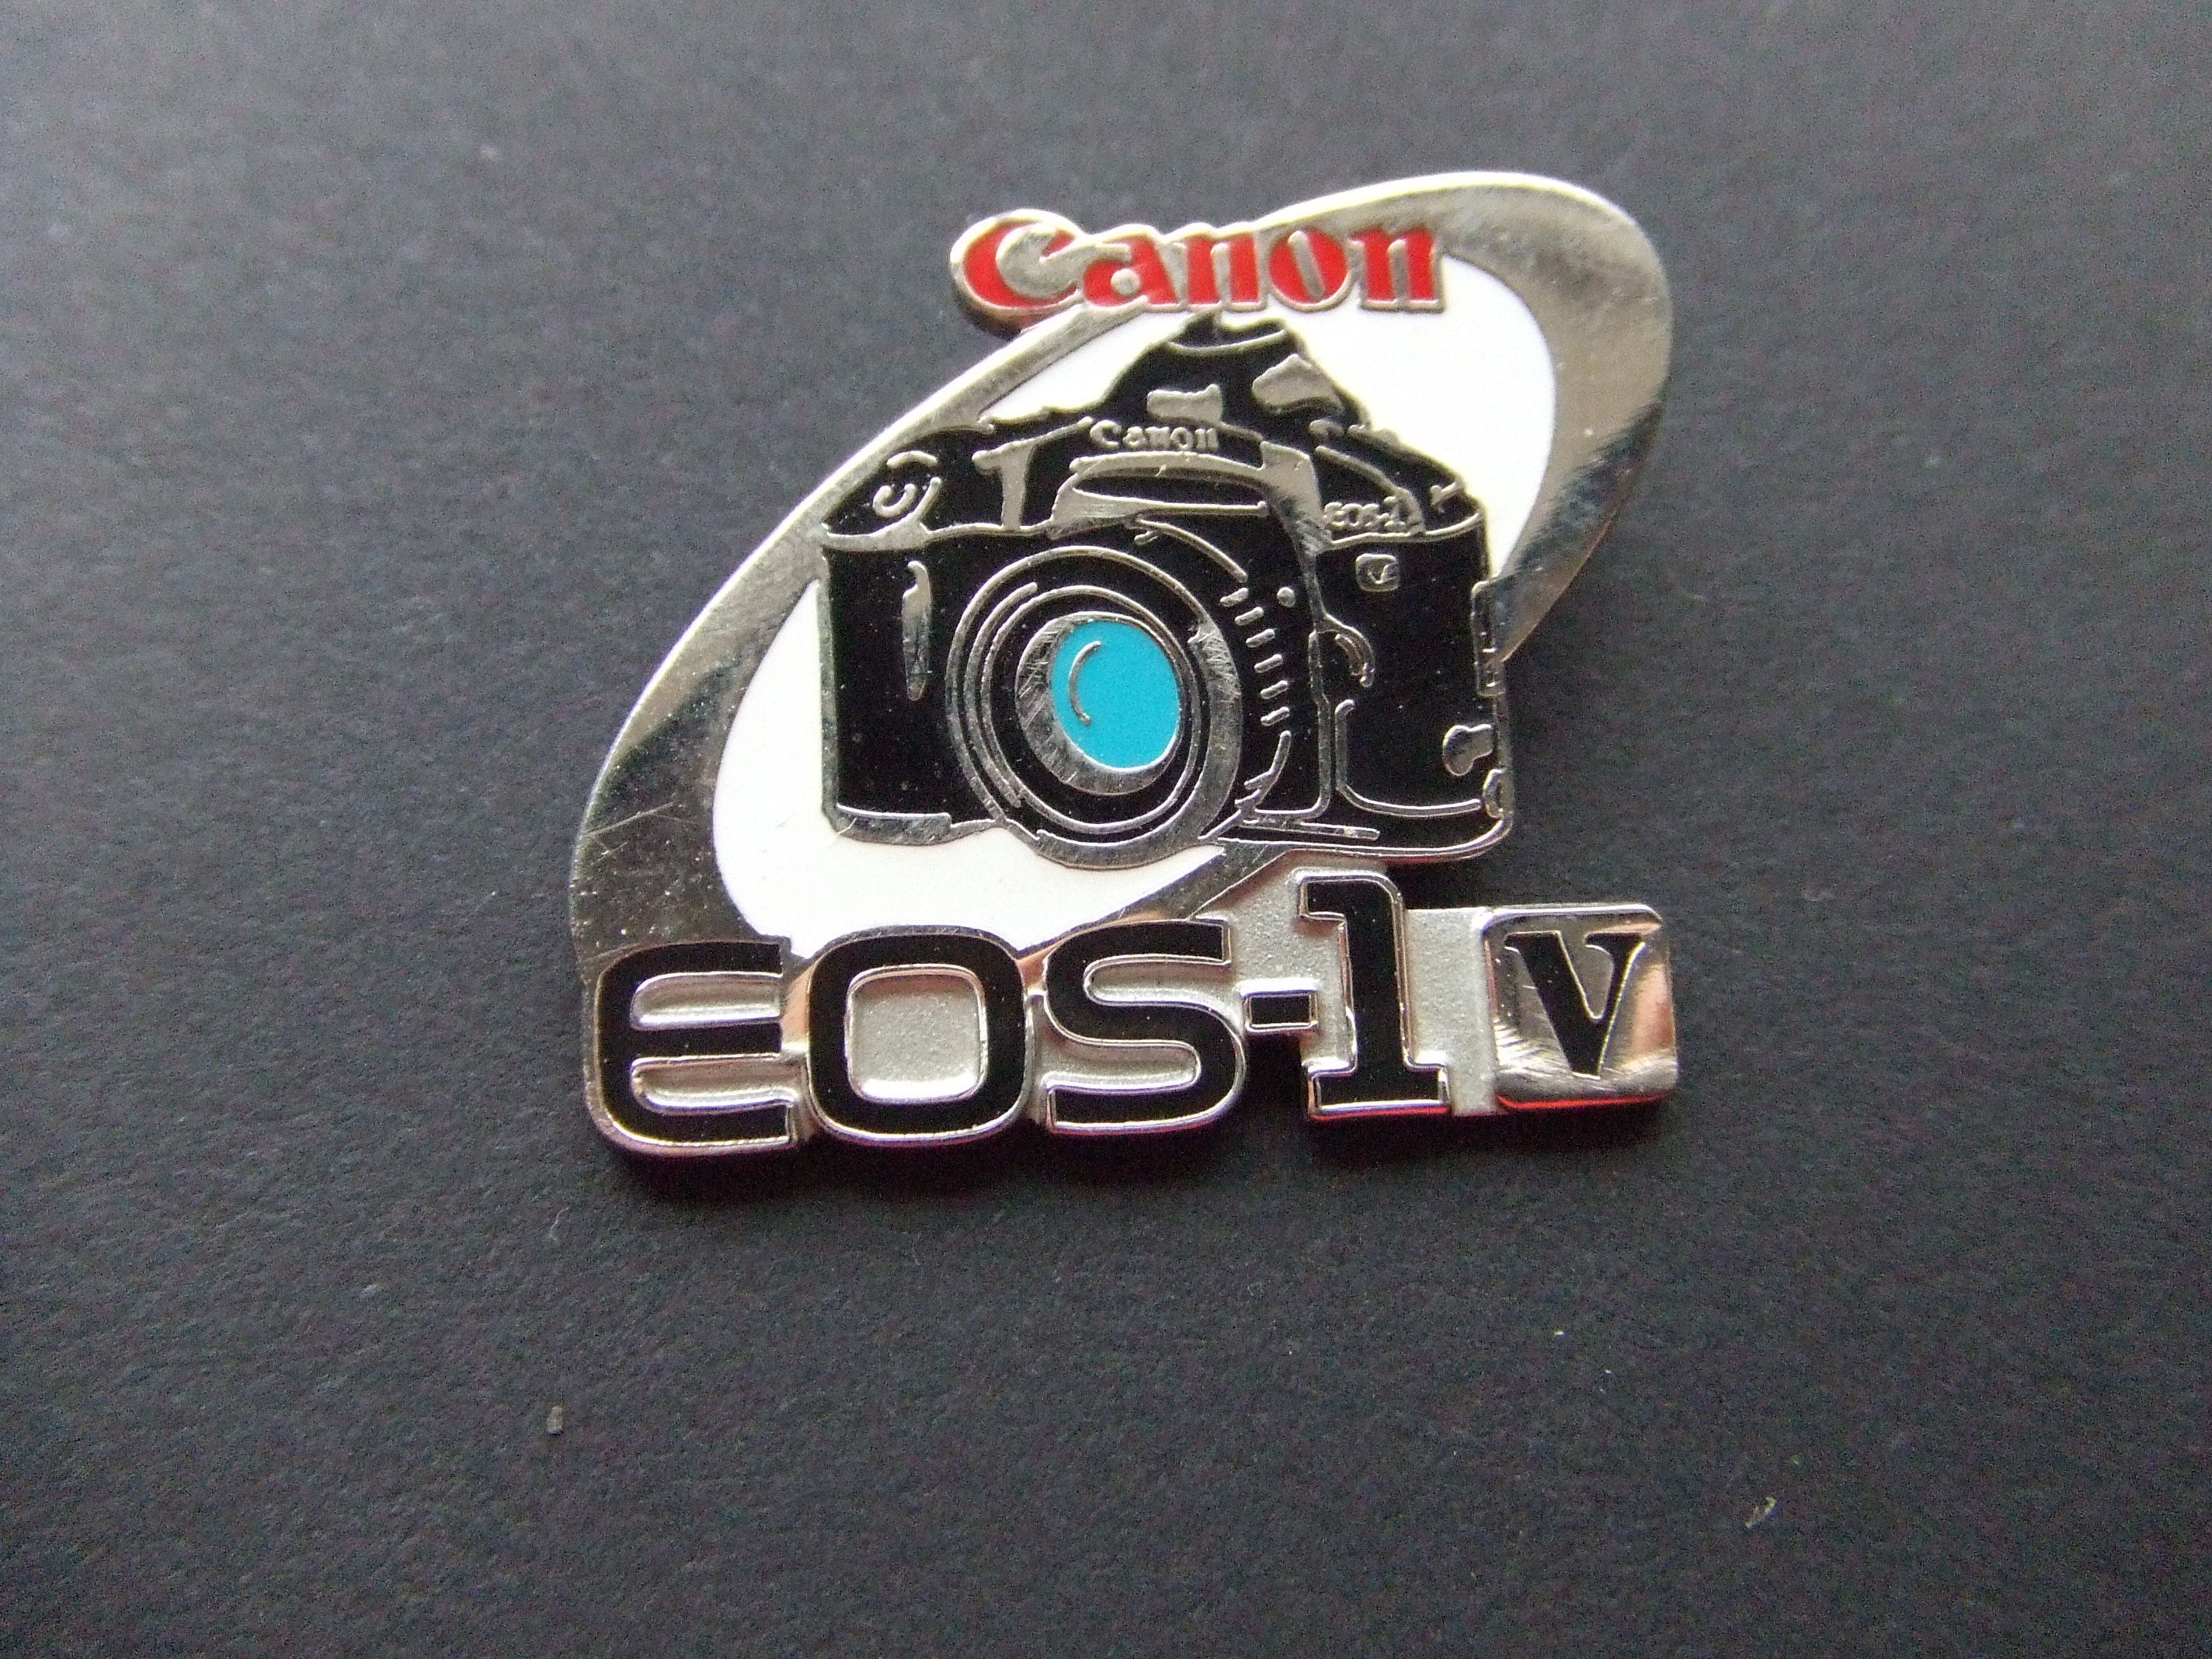 Canon EOS- 1 v fotocamera